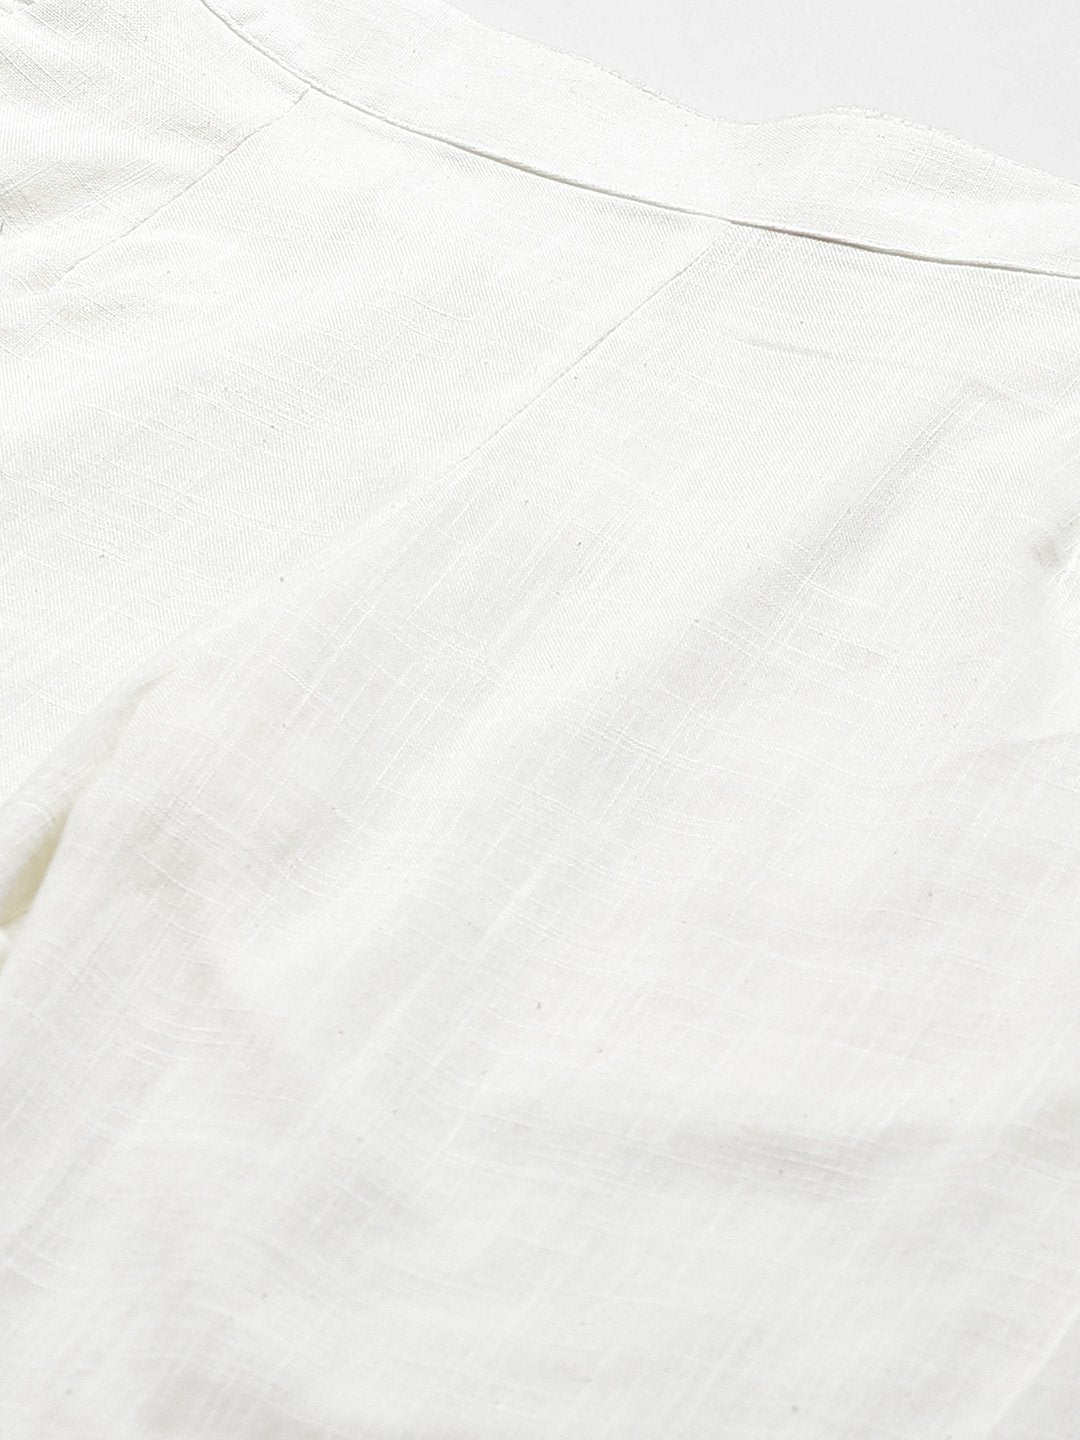 Women's Off White Cotton Trouser  - Wahenoor